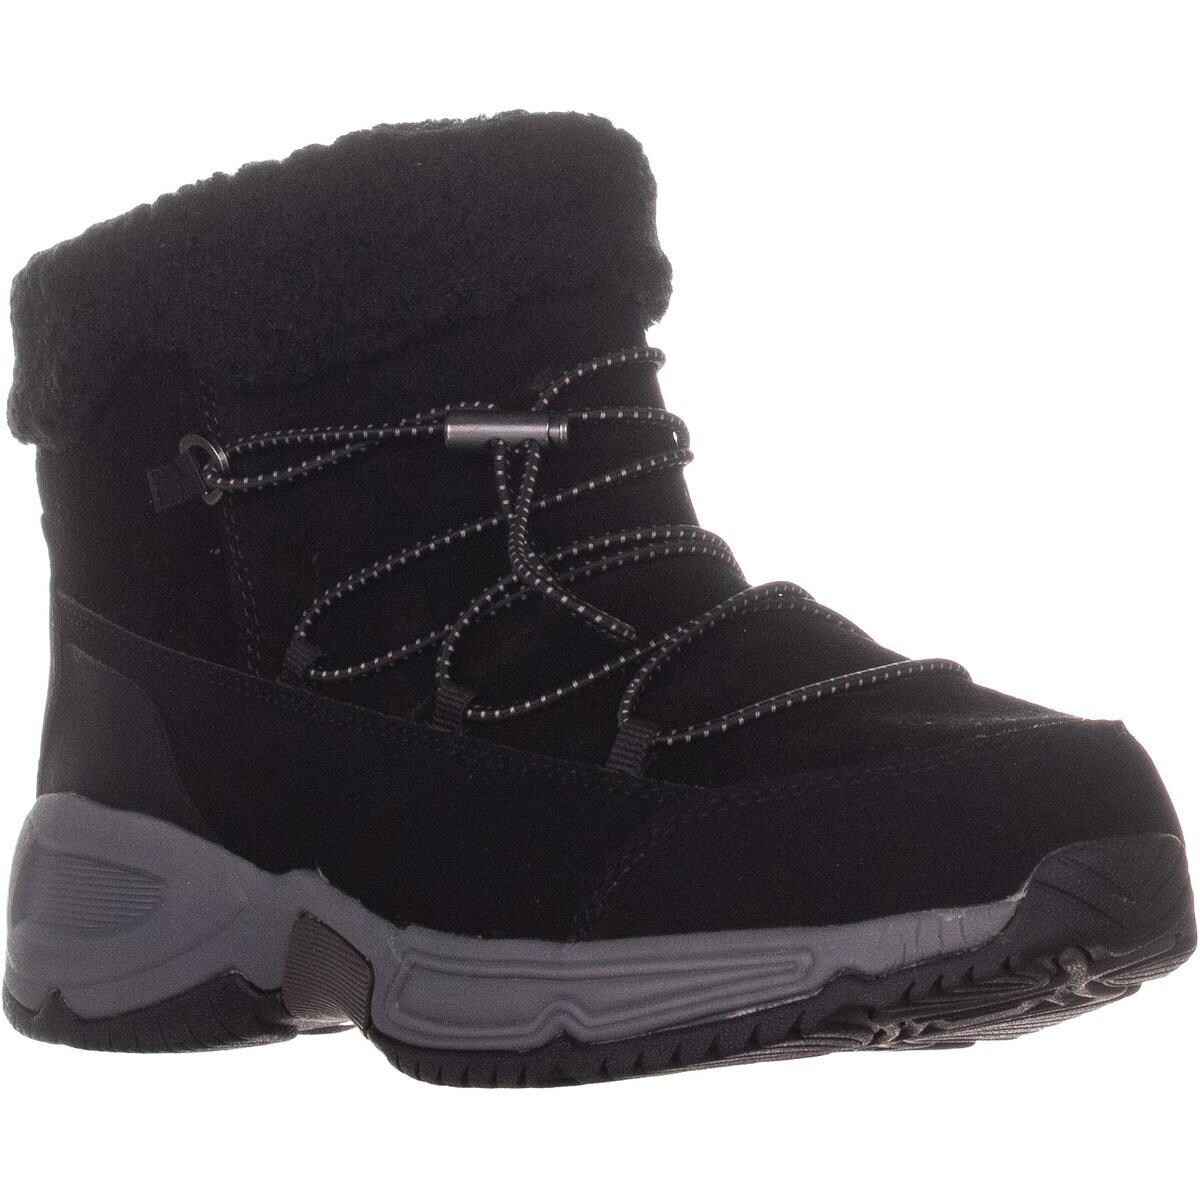 Shop Easy Spirit Voyage Winter Boots, Black - 10 w us - On Sale - Free ...